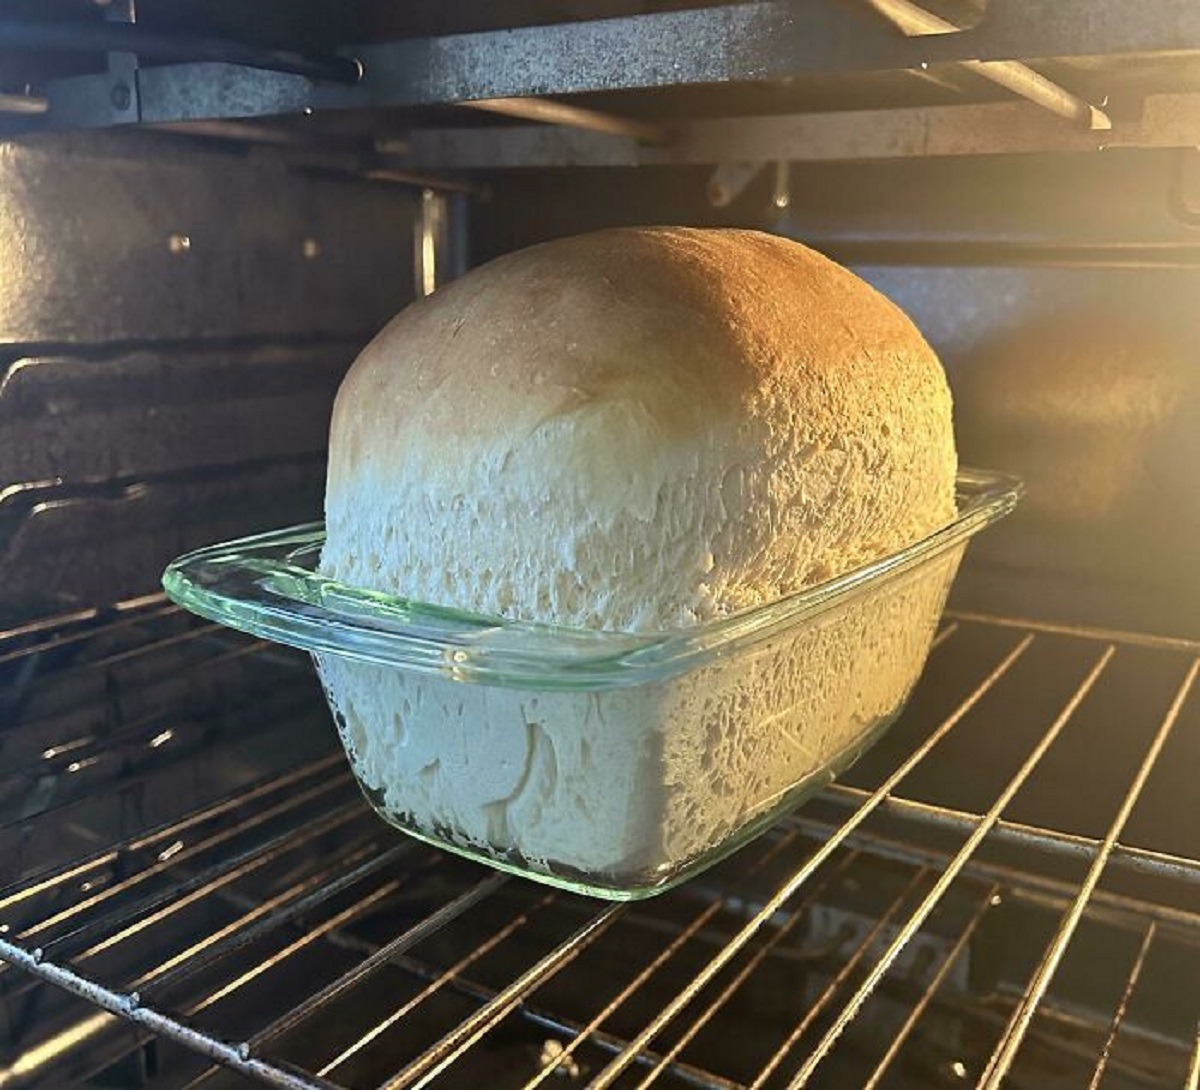 hard dough bread